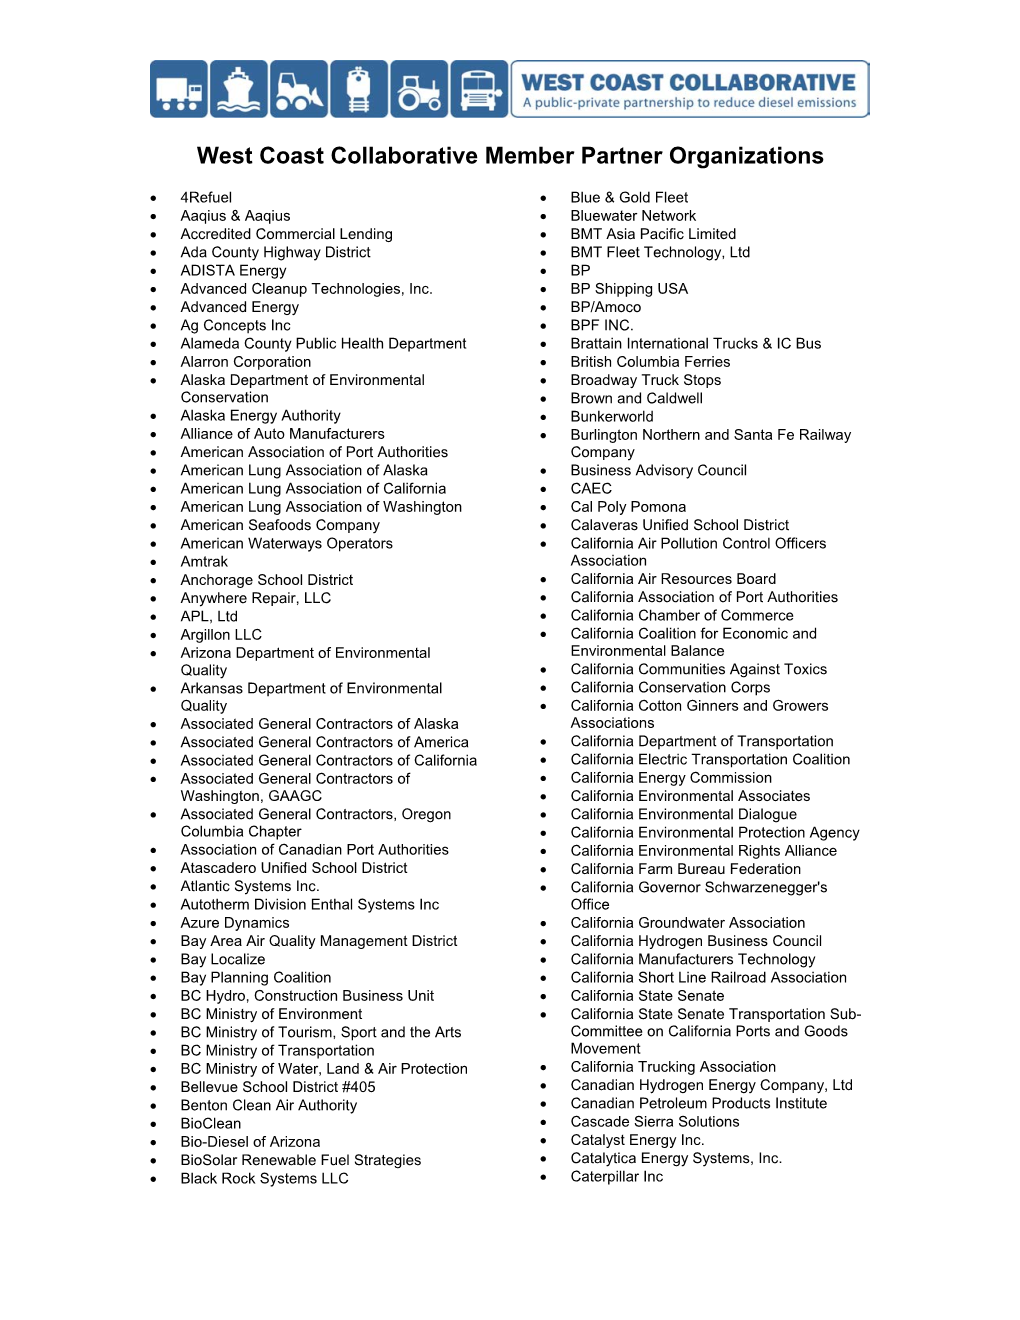 Collaborative Partners List